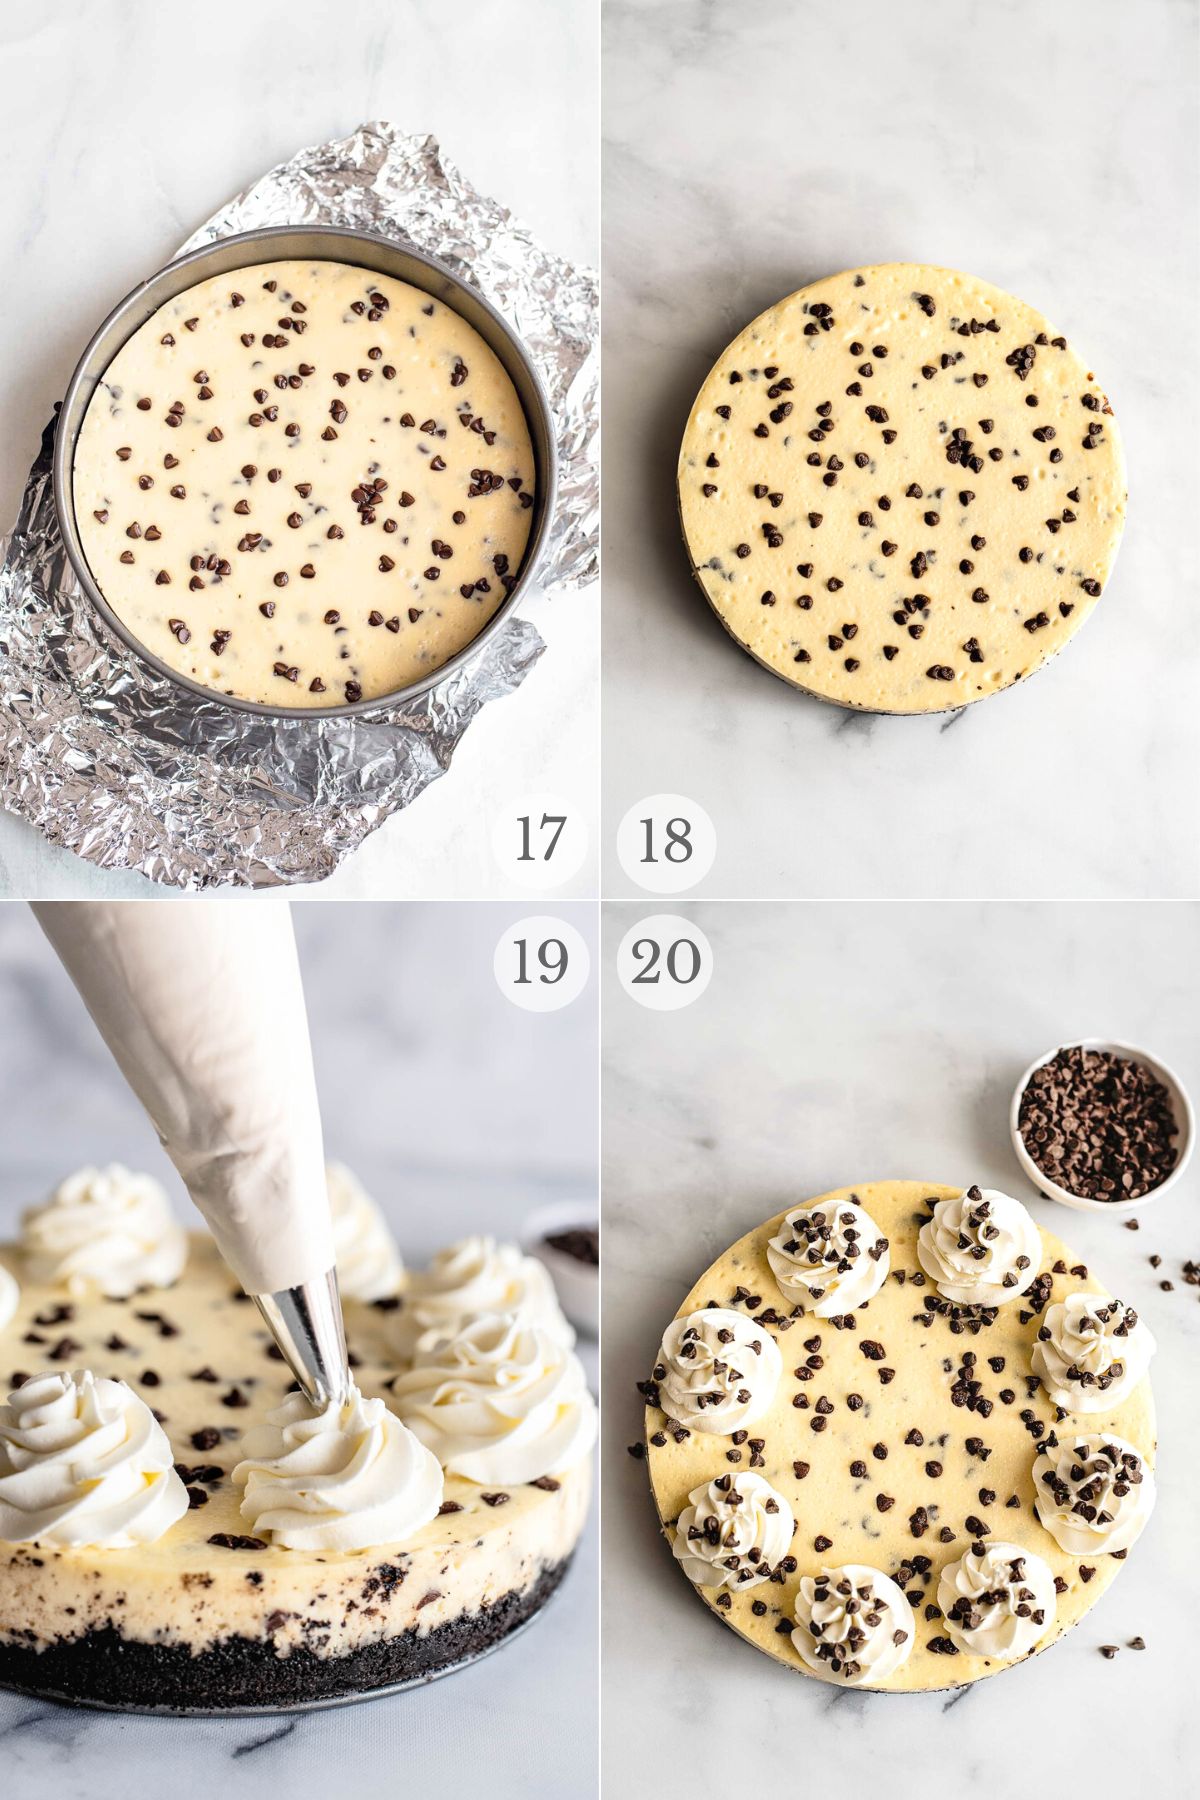 chocolate chip cheesecake recipe steps 17-20.